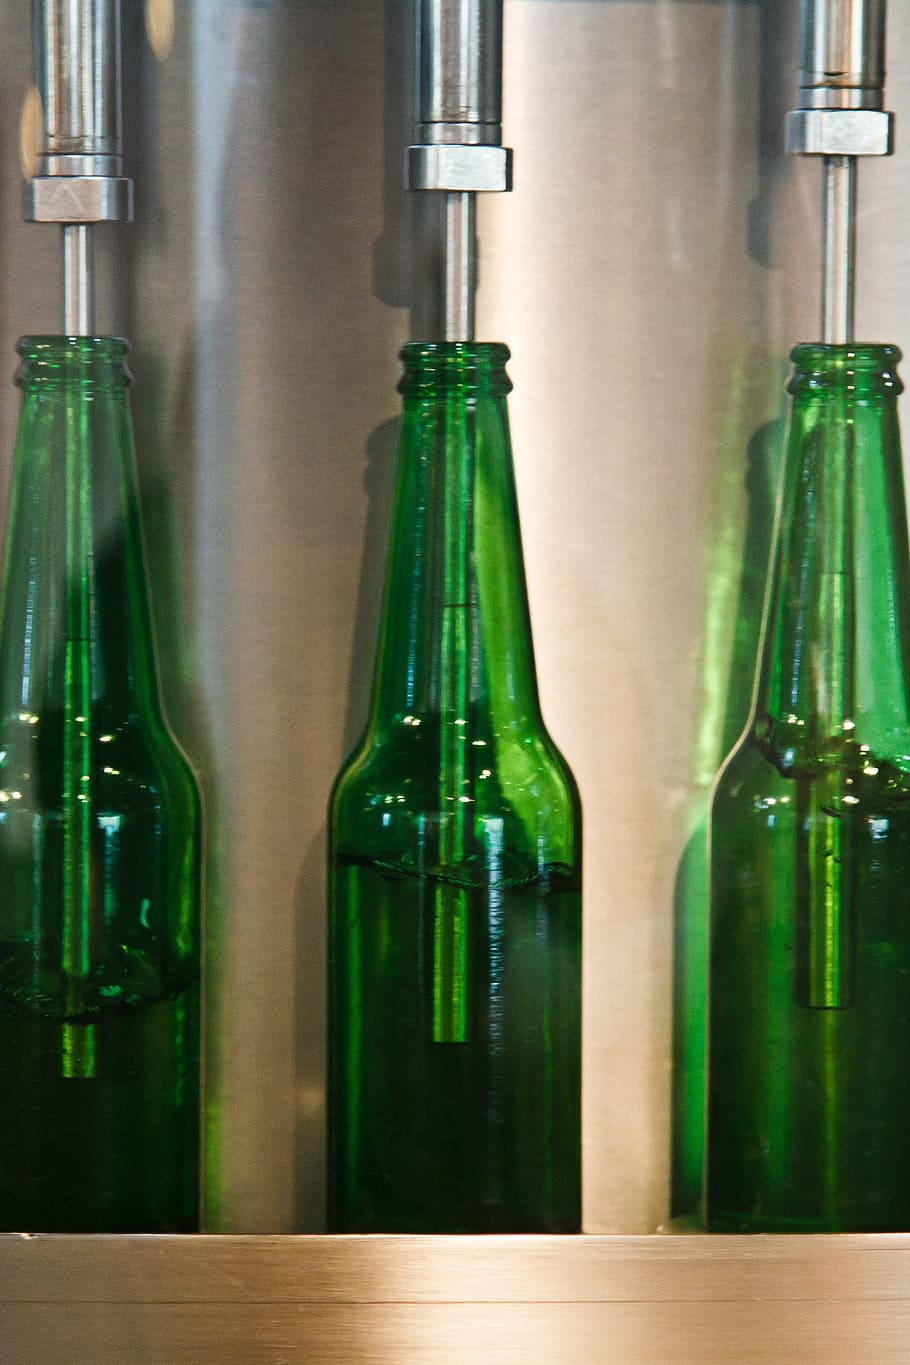 tiga, hijau, botol kaca, Bir, Minuman, Botol, Pembotolan, tempat pembuatan bir, bersih, minum